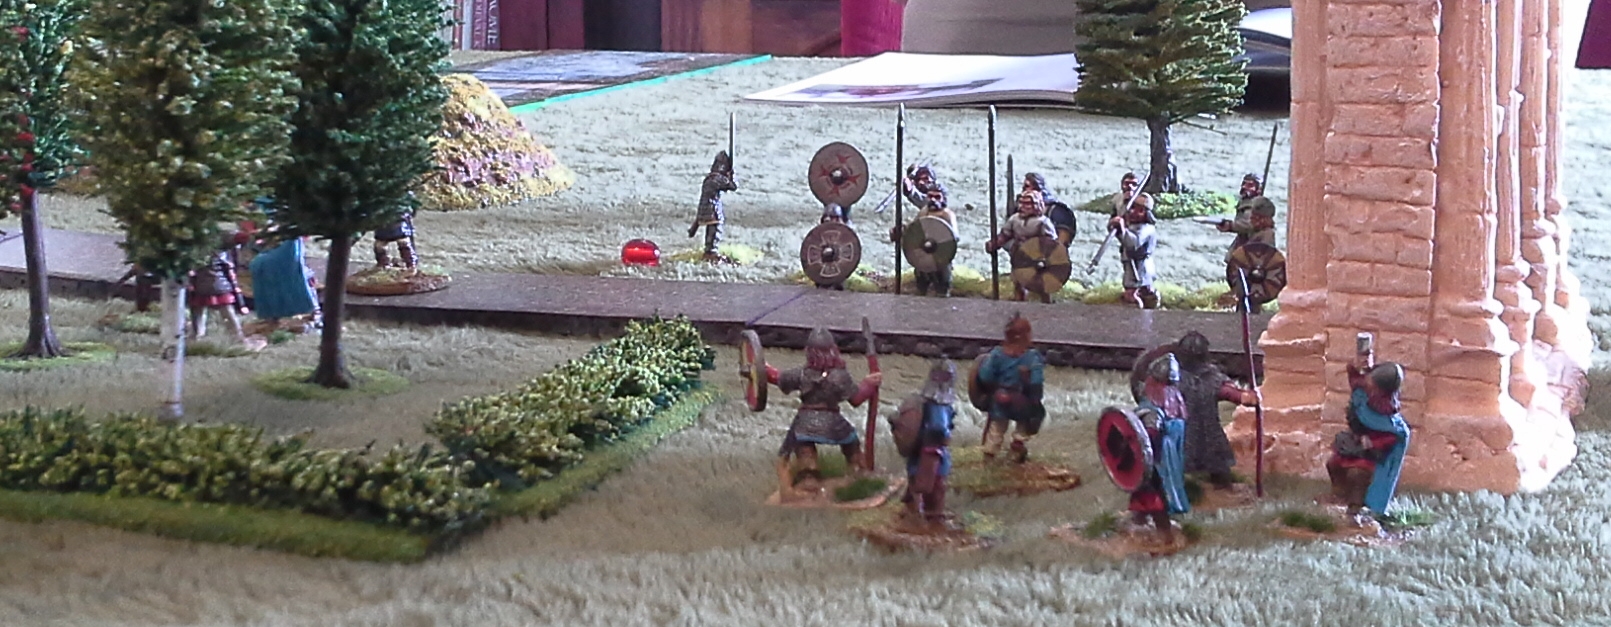 The Saxons form a shieldwall